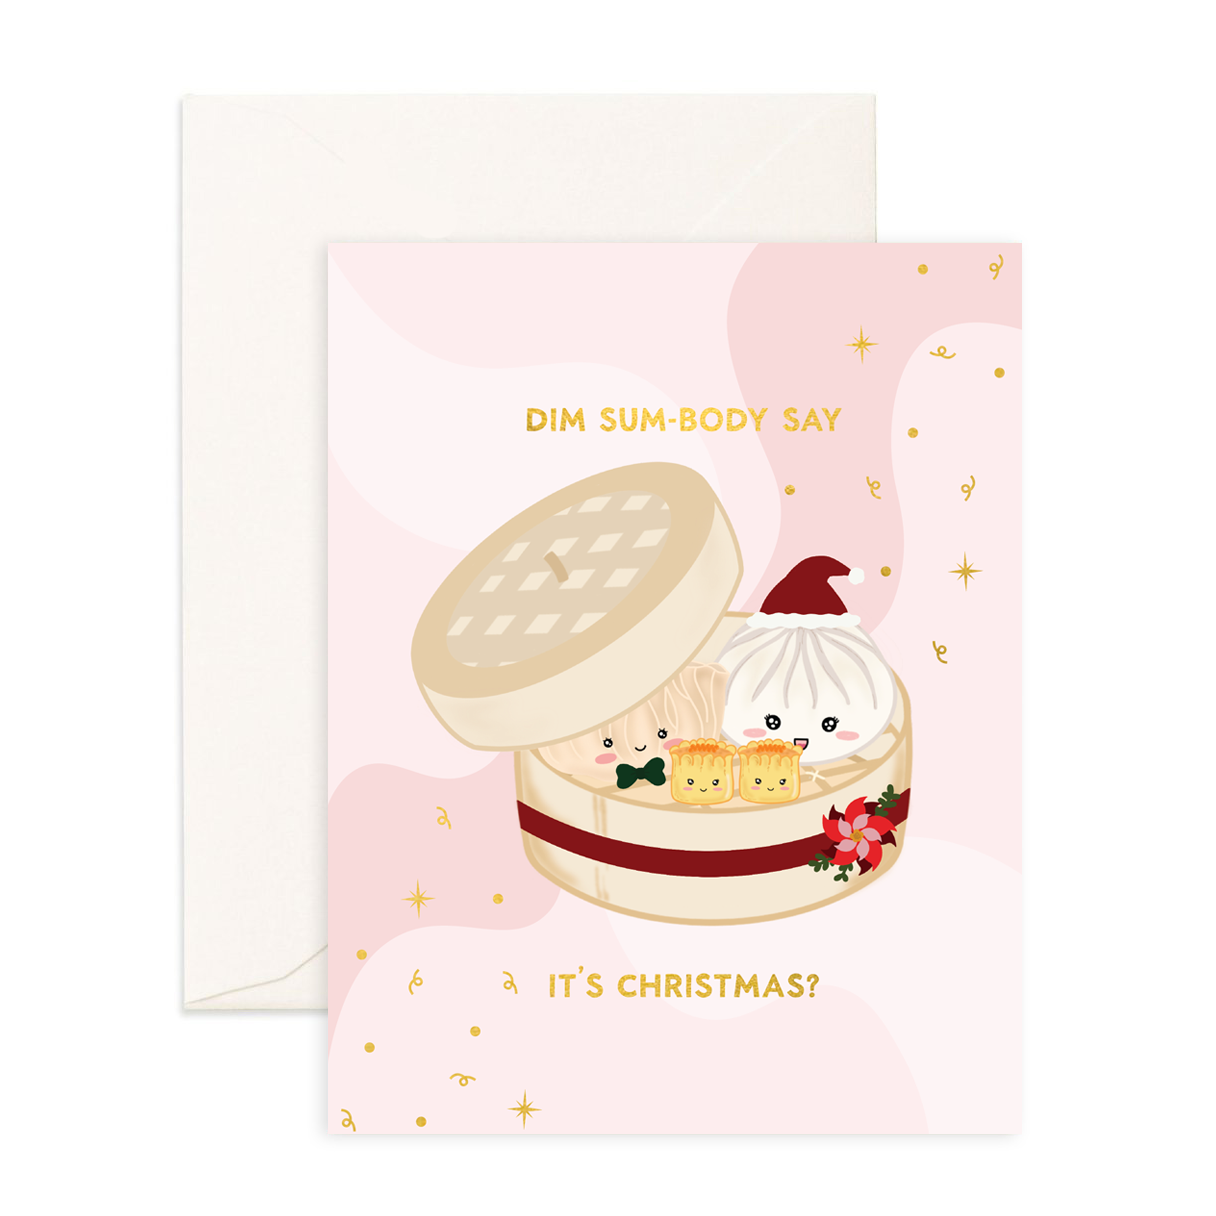 Dim Sum-body ... Christmas -  Christmas Greeting Card